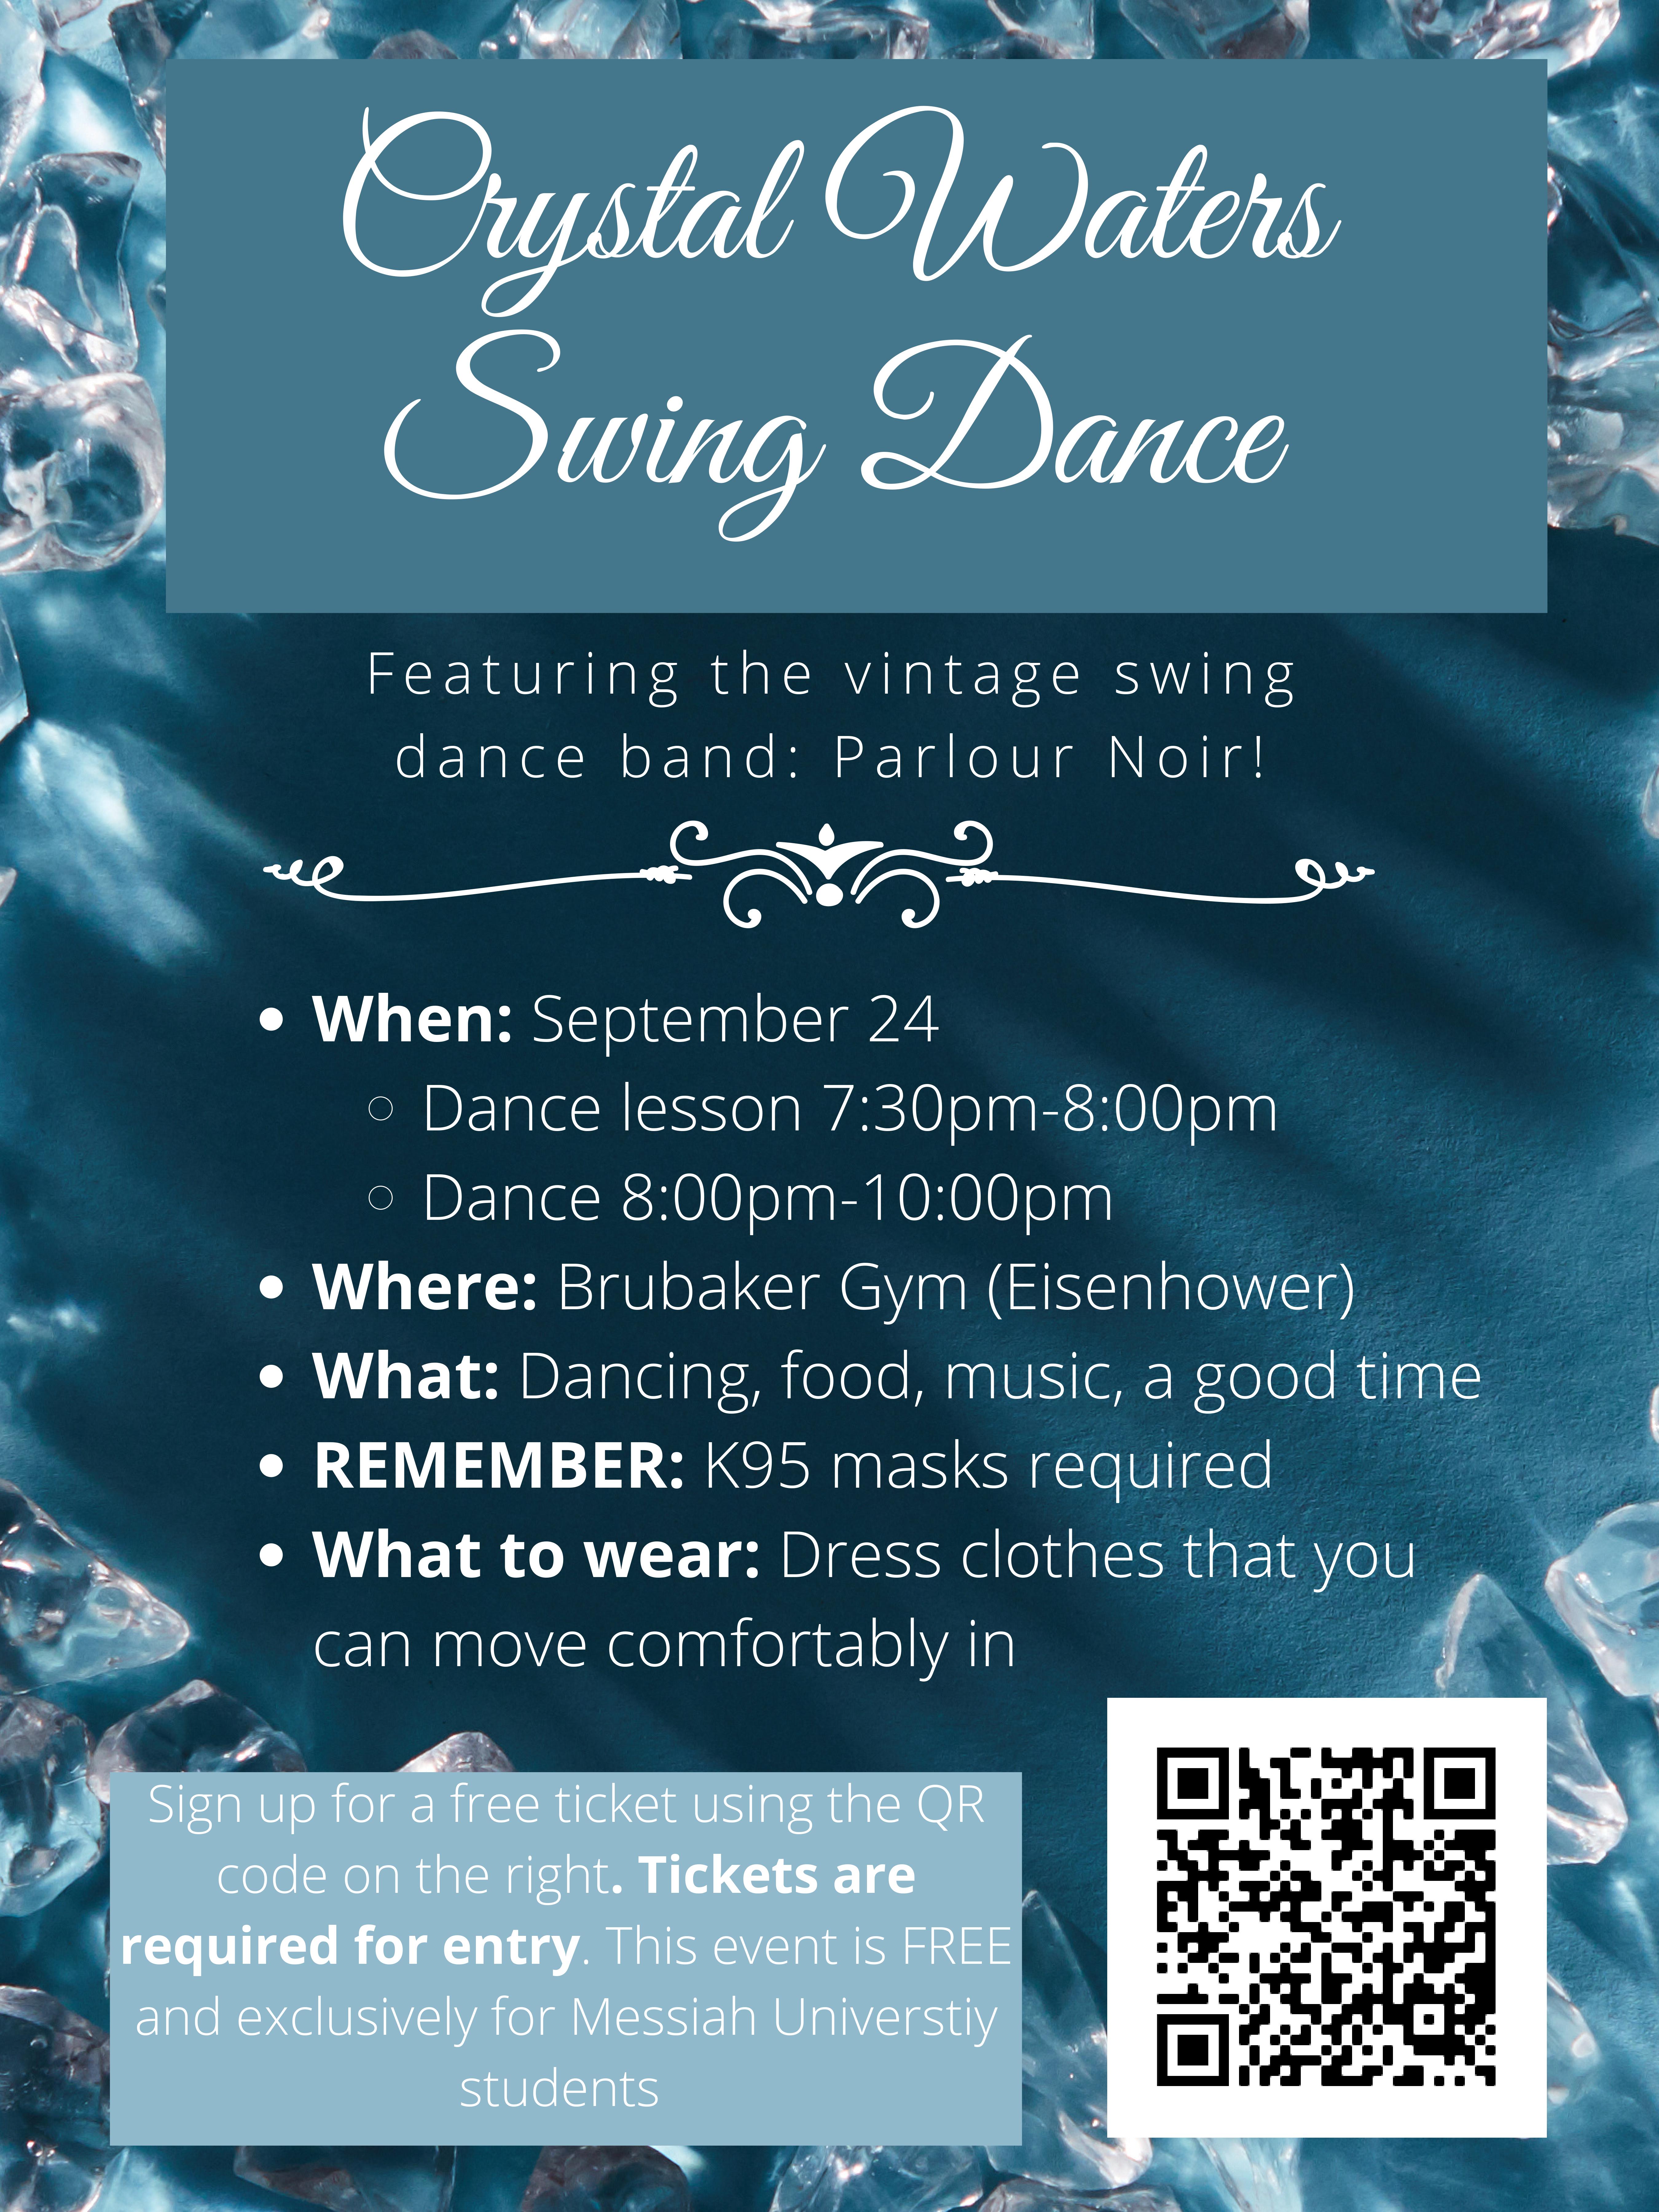 Swing dance event